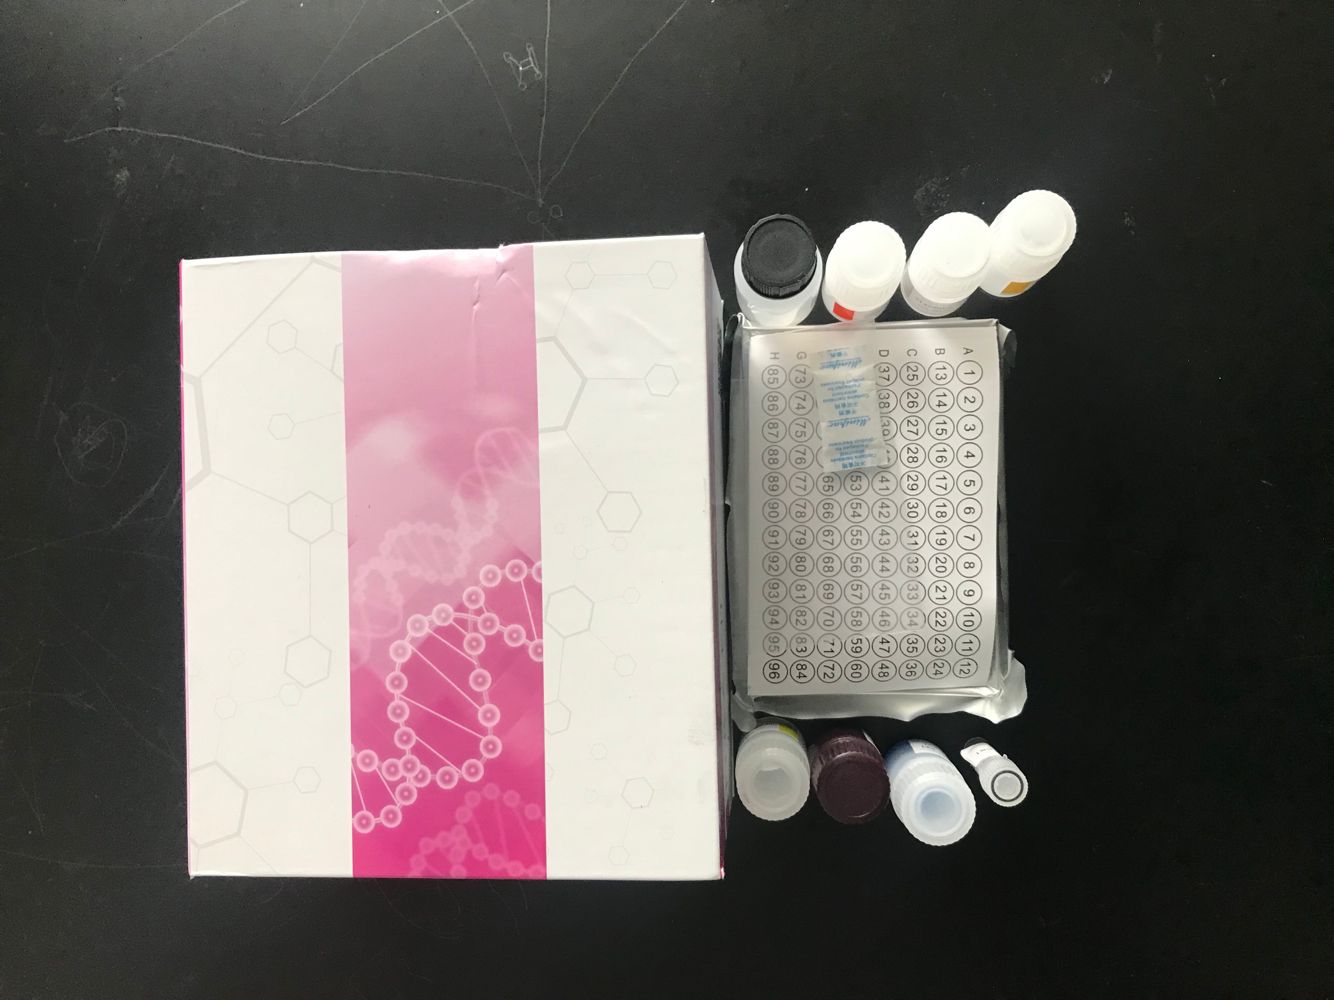 α1受体自身抗体检测试剂盒进口试剂